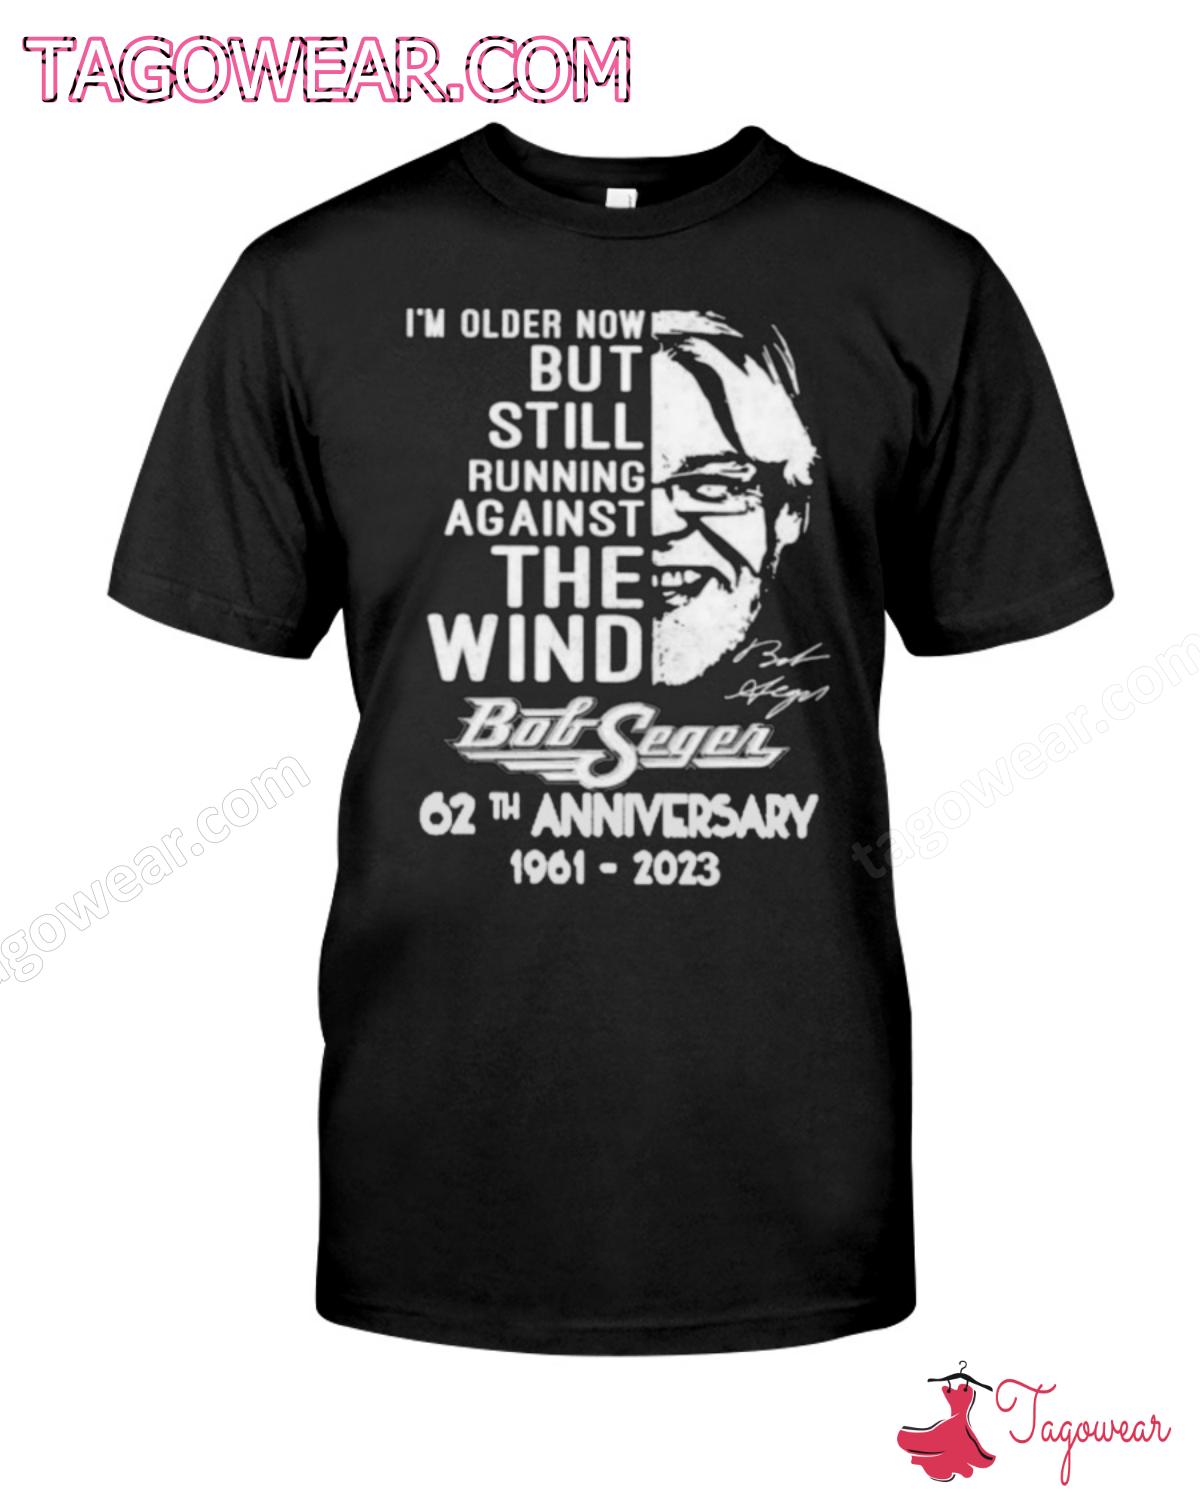 I'm Older Now But Still Running Against The Wind Bob Seger 62th Anniversary 1961-2023 Shirt